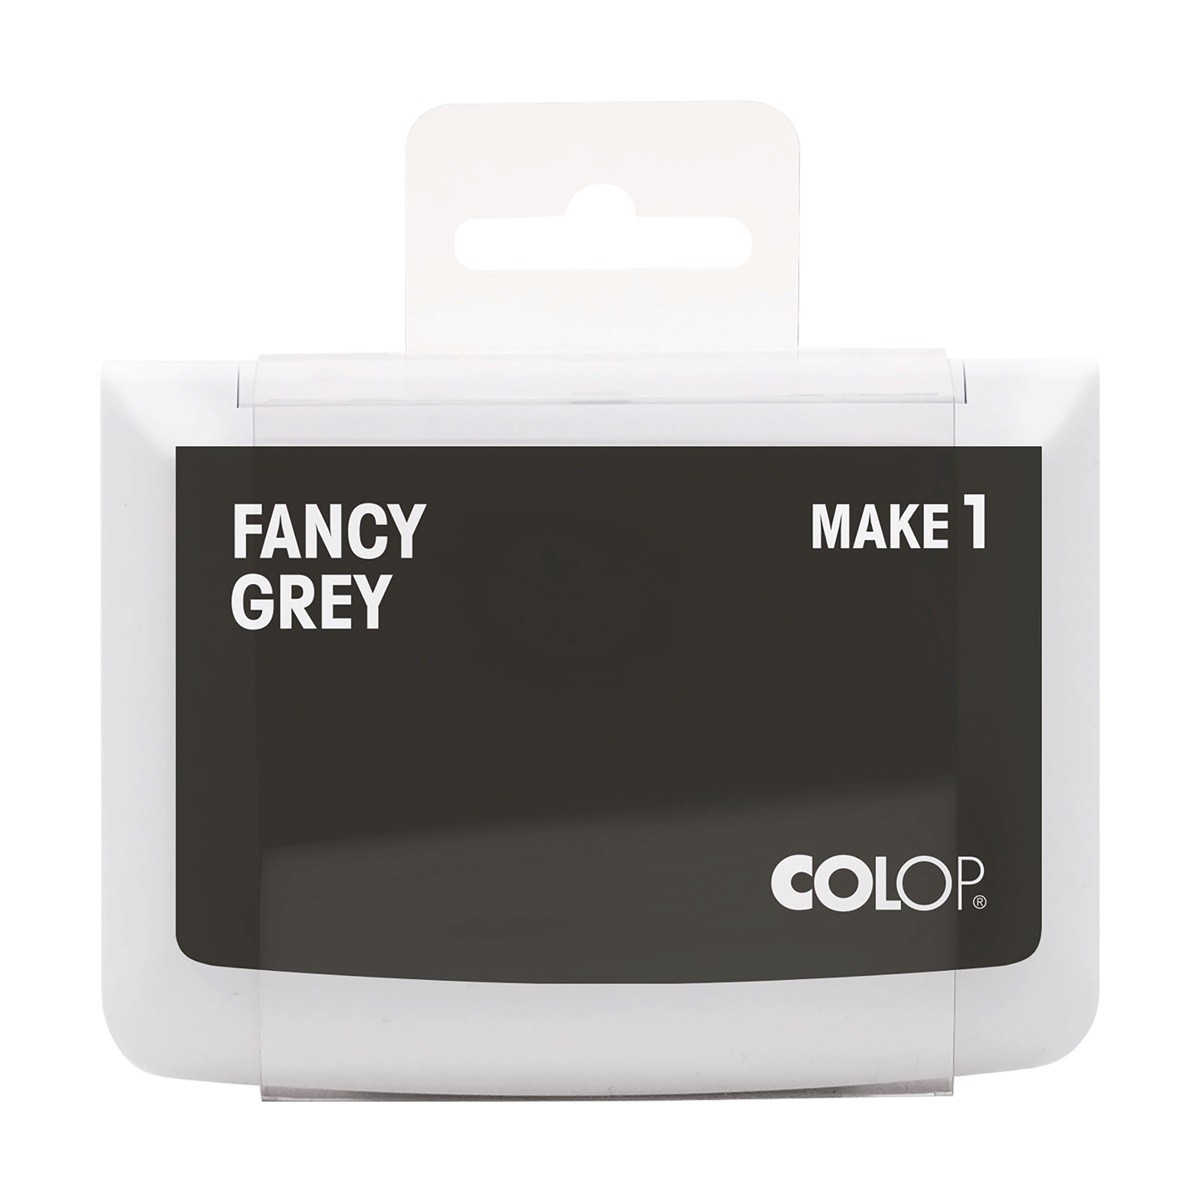 COLOP Arts & Crafts MAKE 1 Ταμπόν Σφραγίδας Fancy Grey